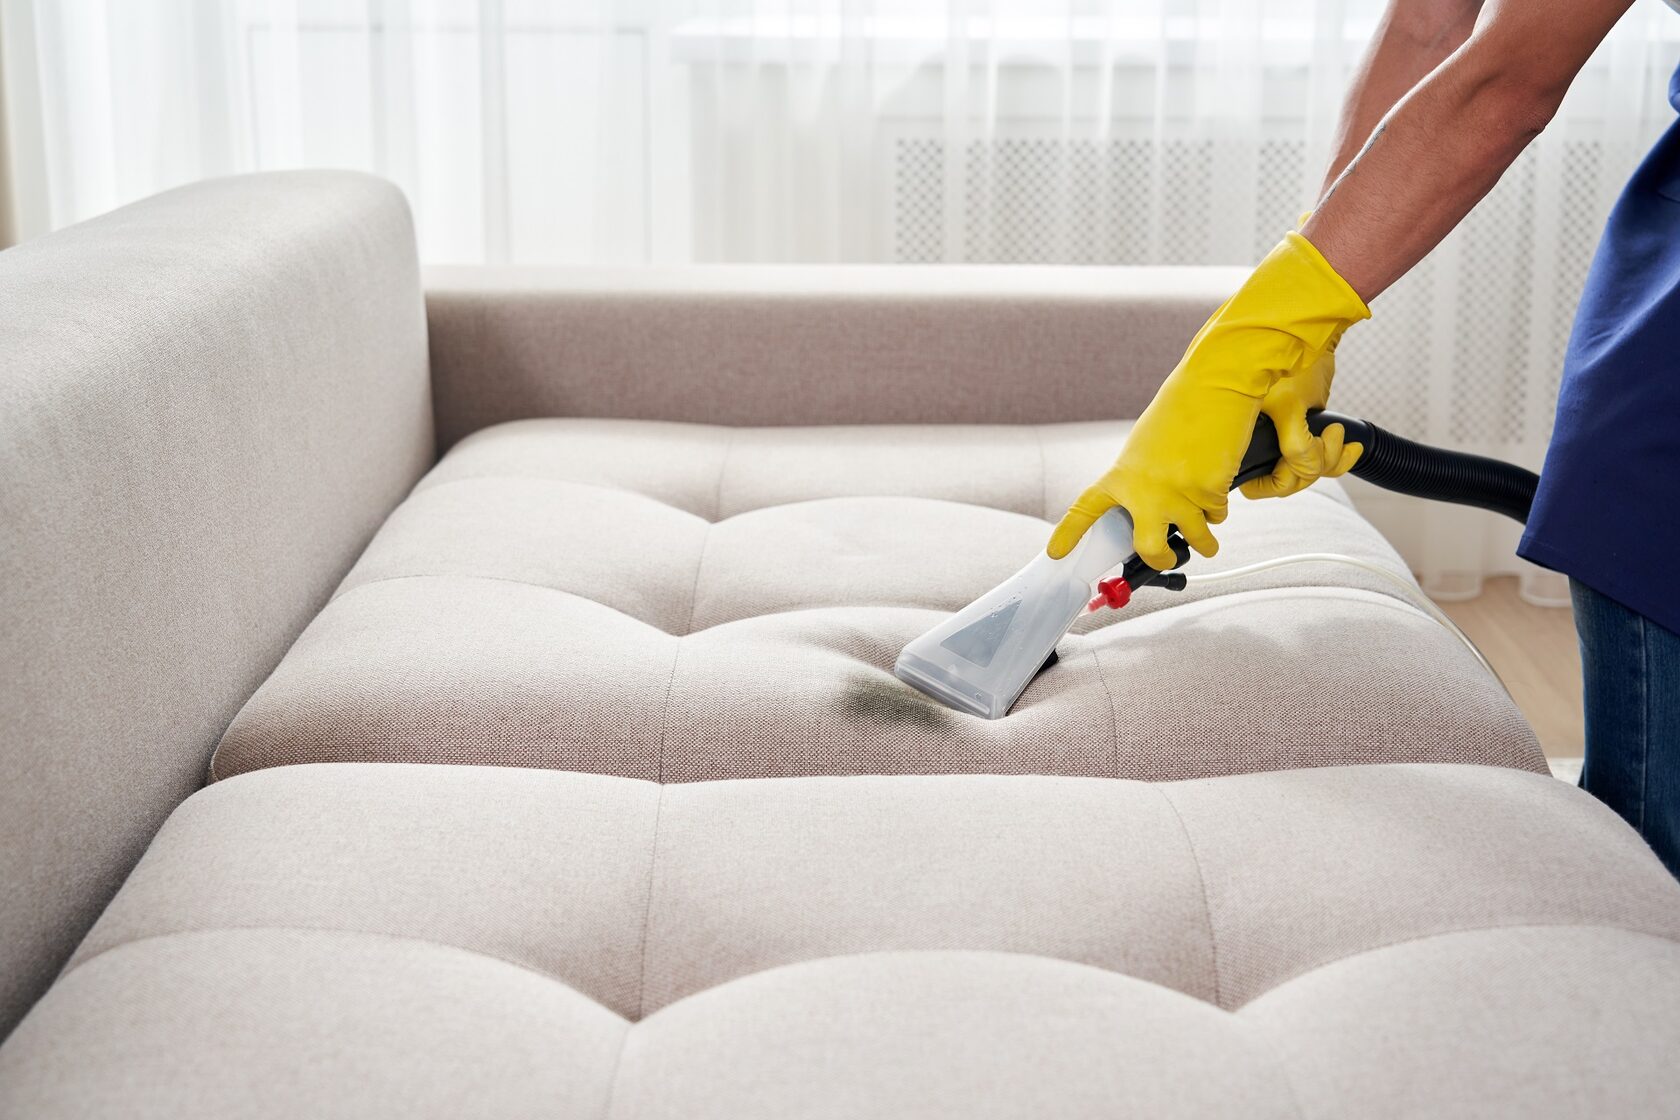 Химчистка мебели: правила и рекомендации